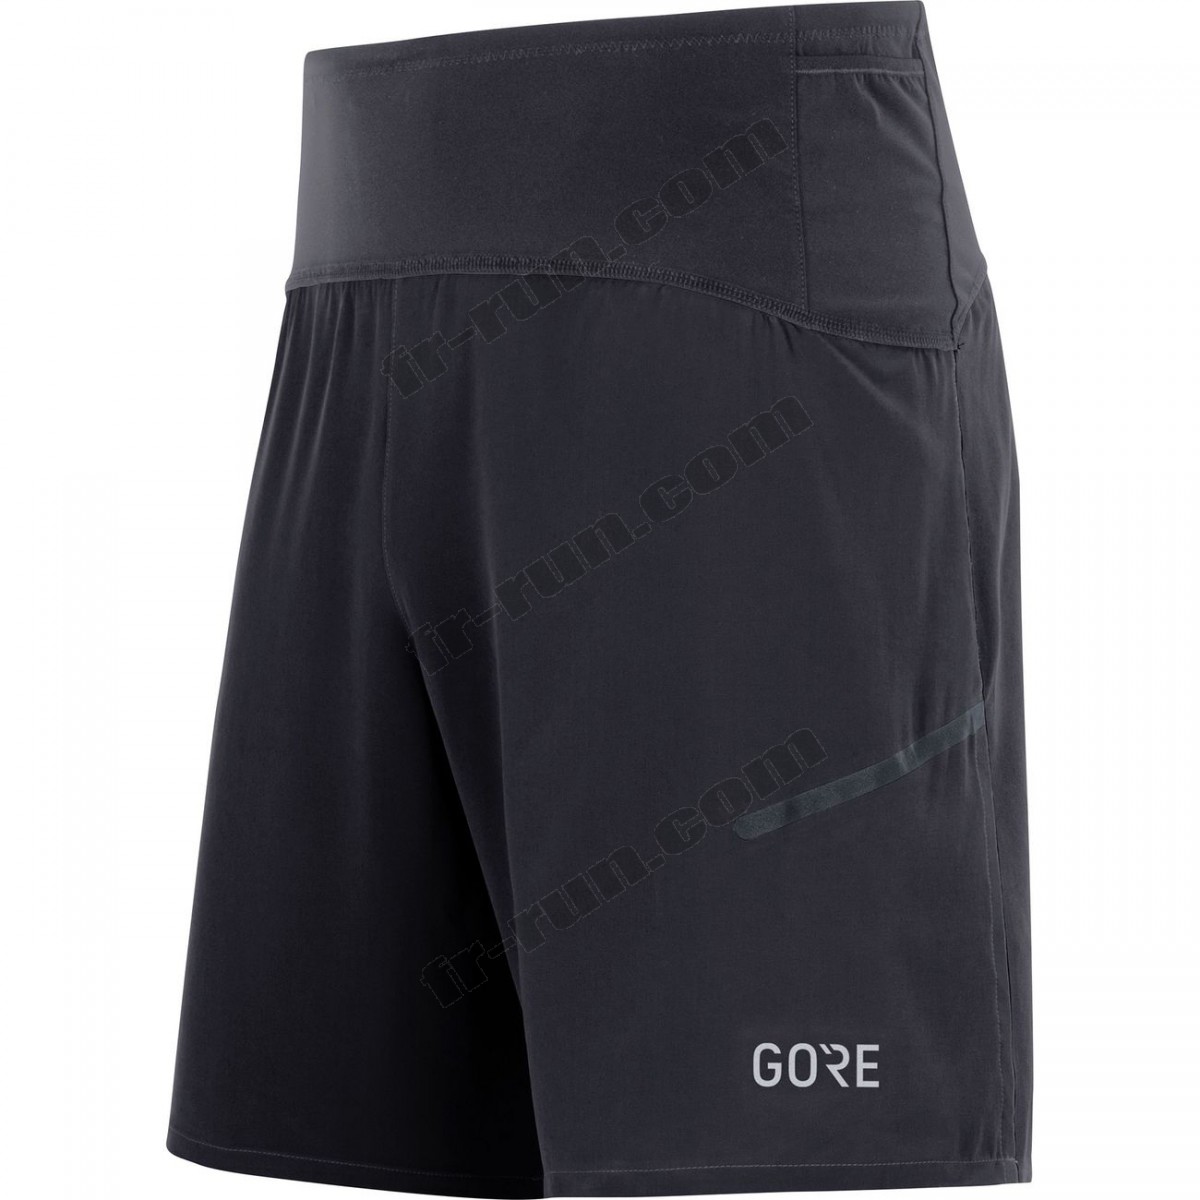 Gore/running homme GORE Gore® Wear R7 ◇◇◇ Pas Cher Du Tout - -1